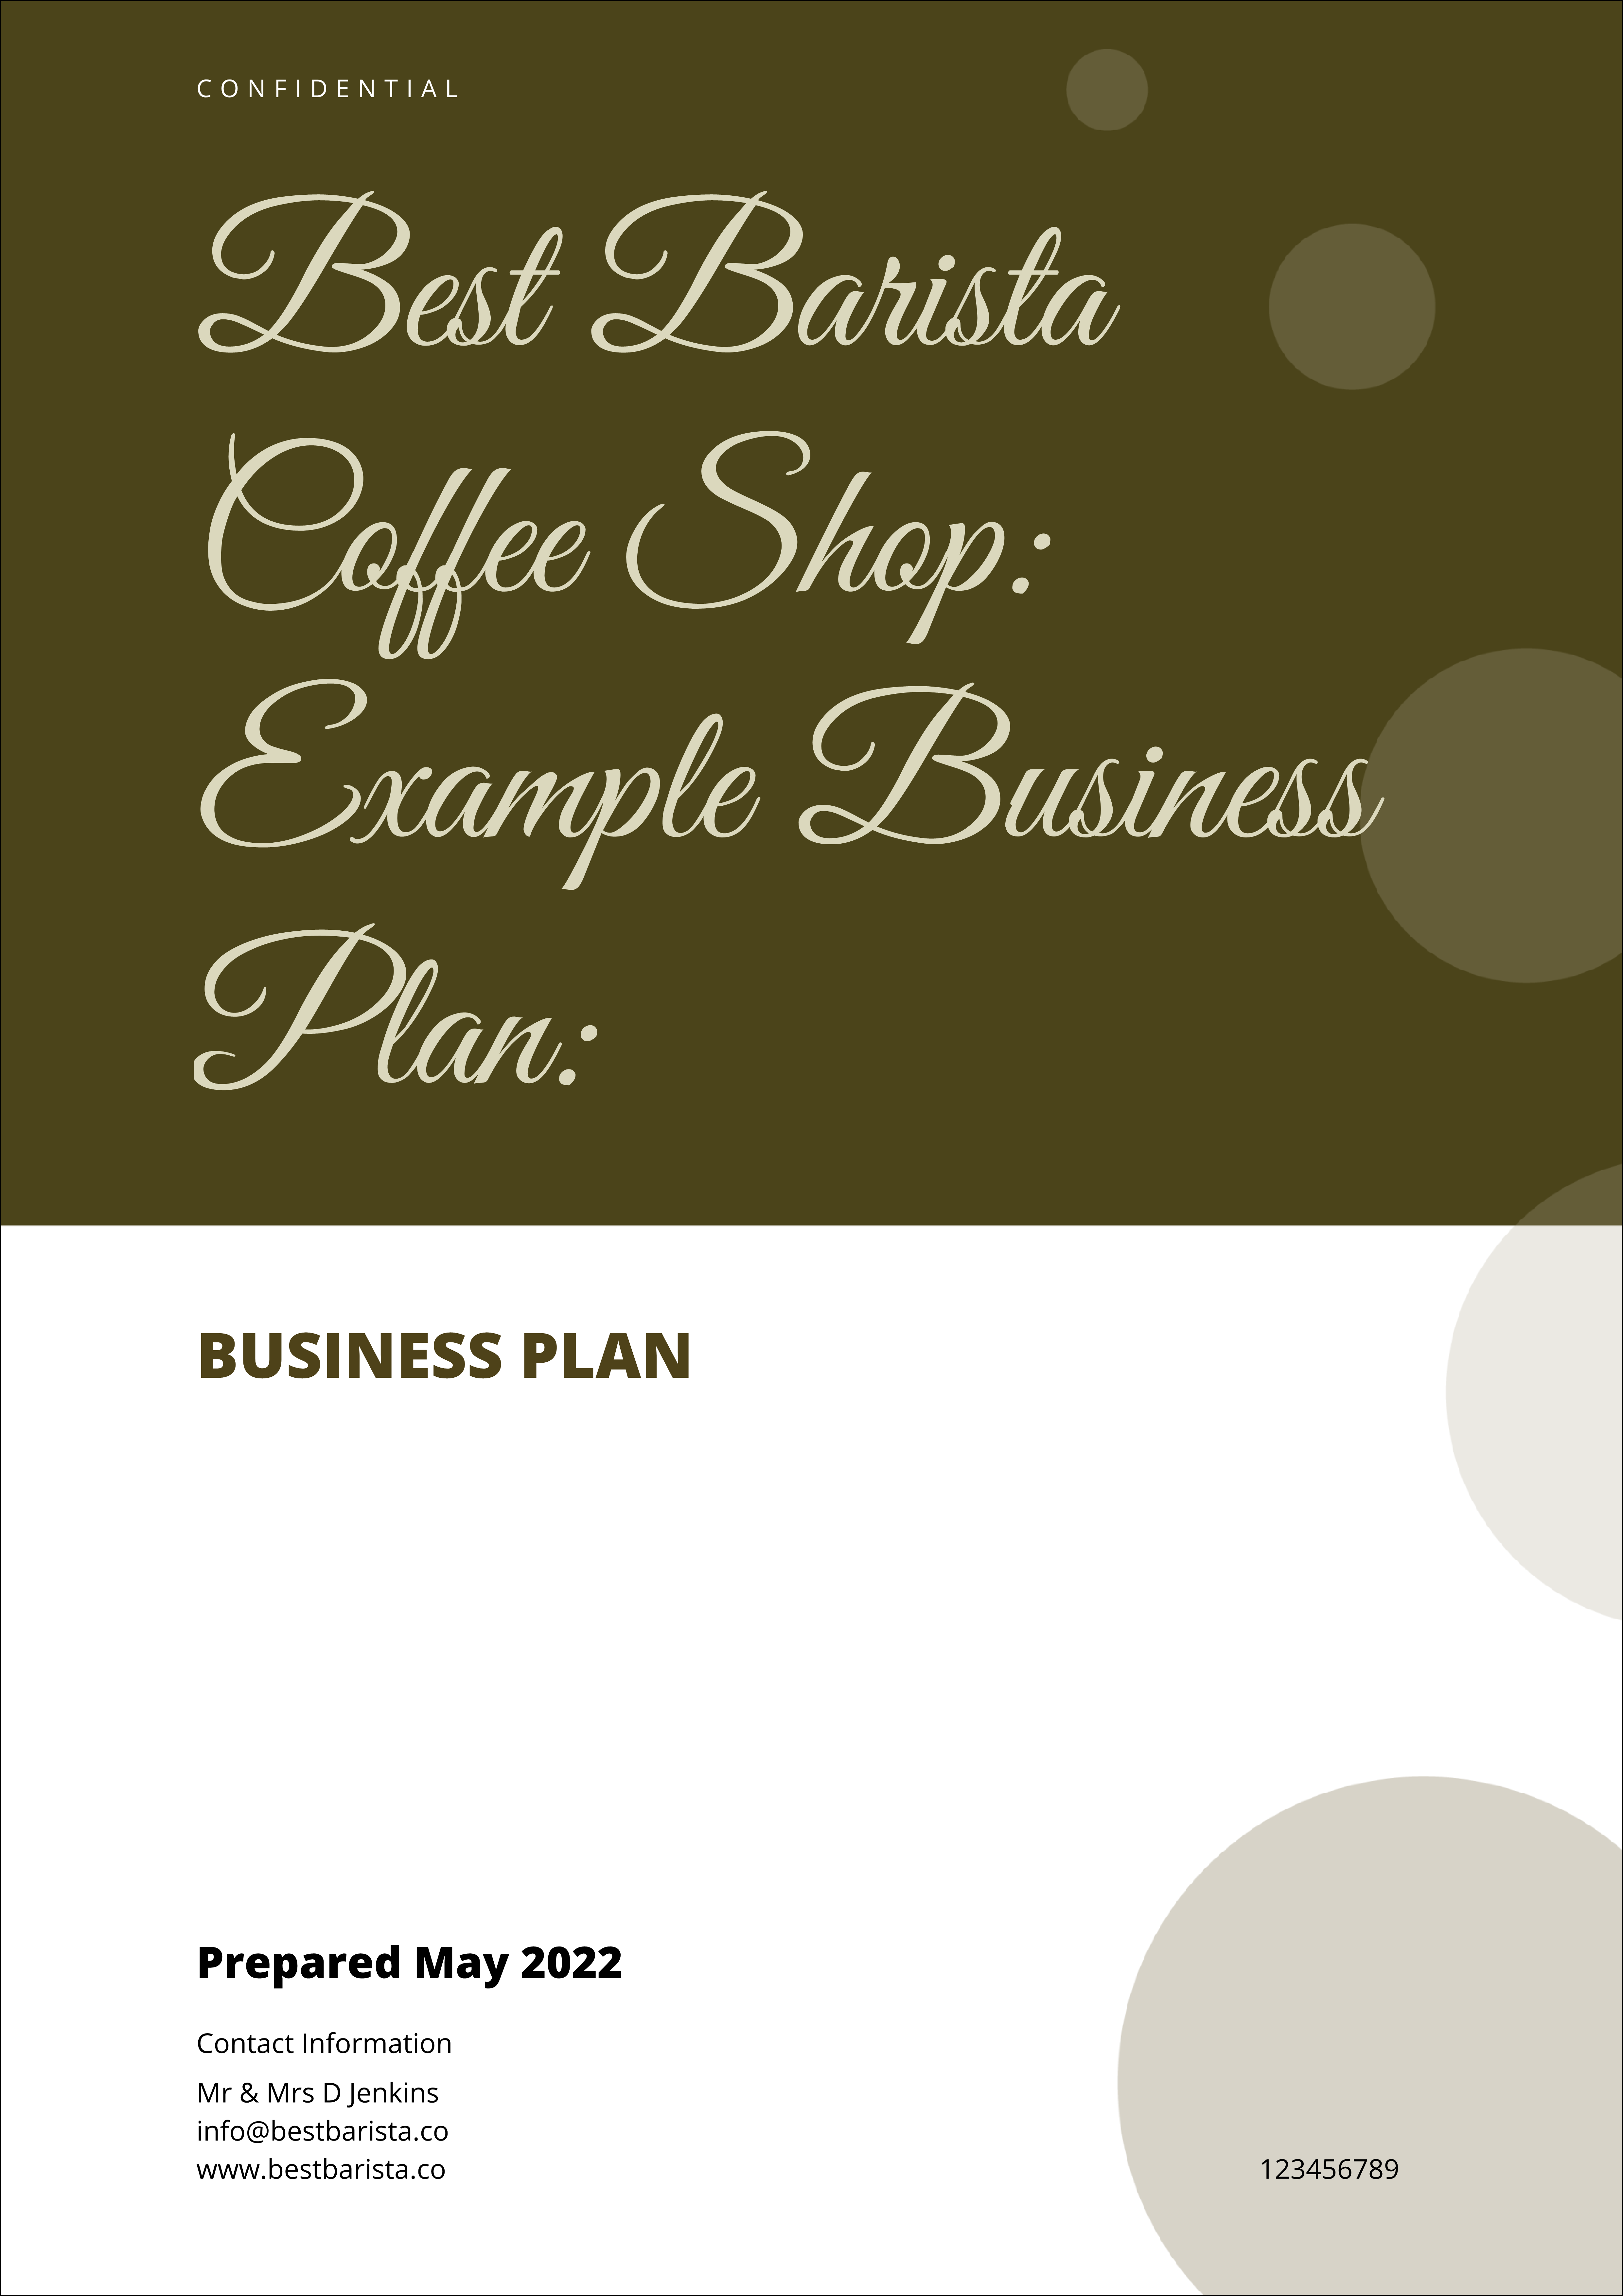 Coffee Shop Franchise Business Plan